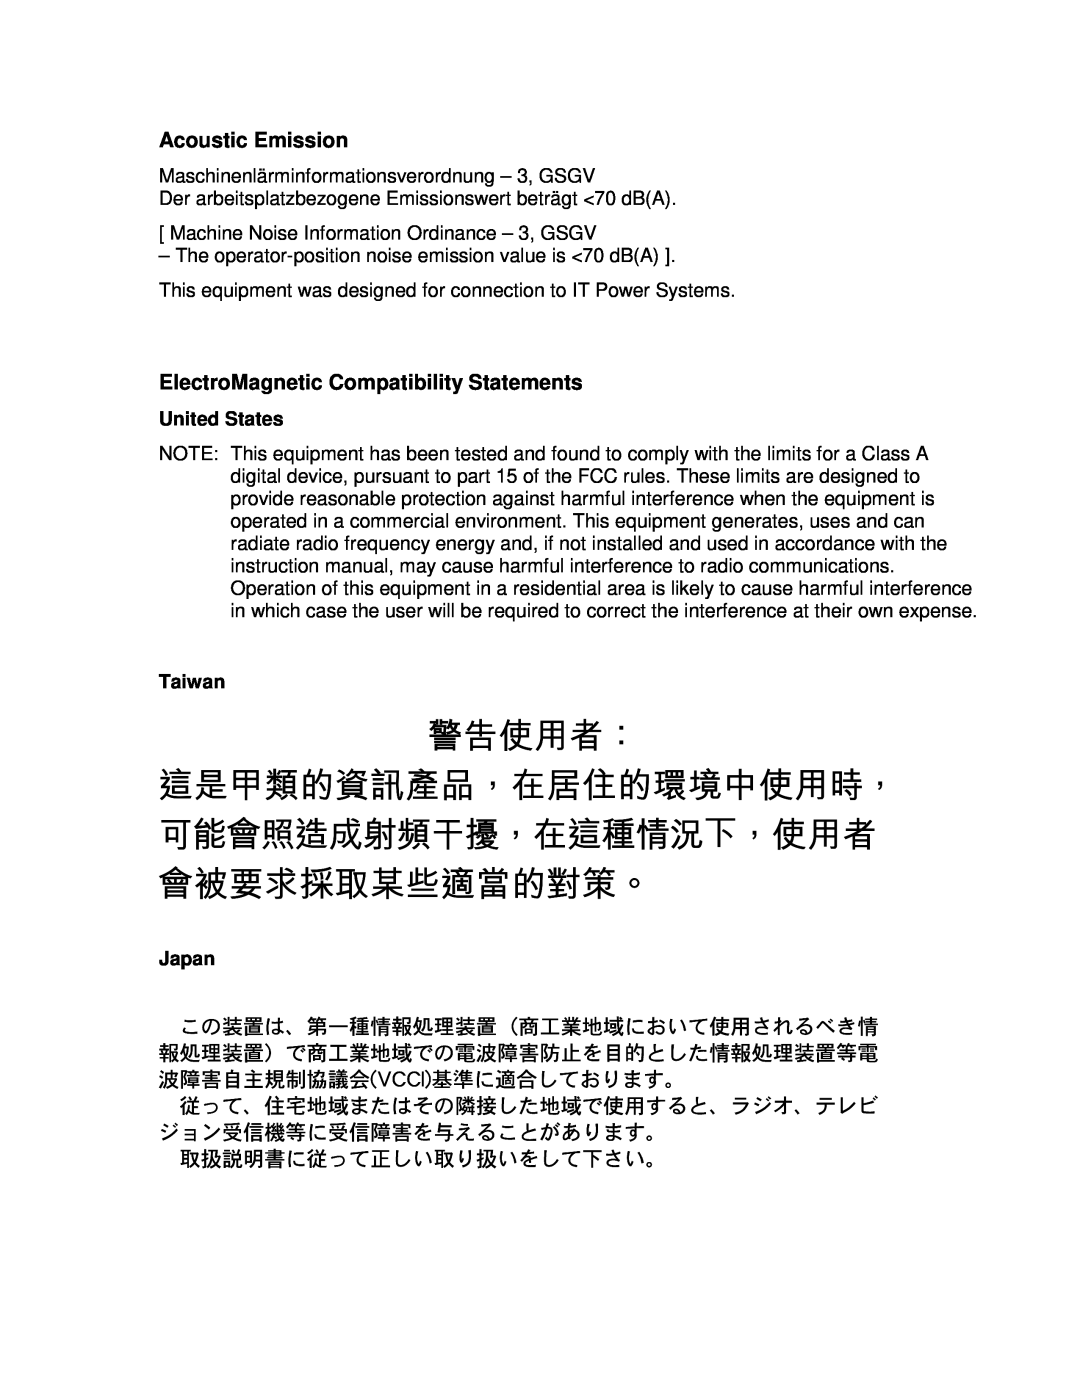 Kodak 7520 manual Acoustic Emission, ElectroMagnetic Compatibility Statements, United States, Taiwan Japan 